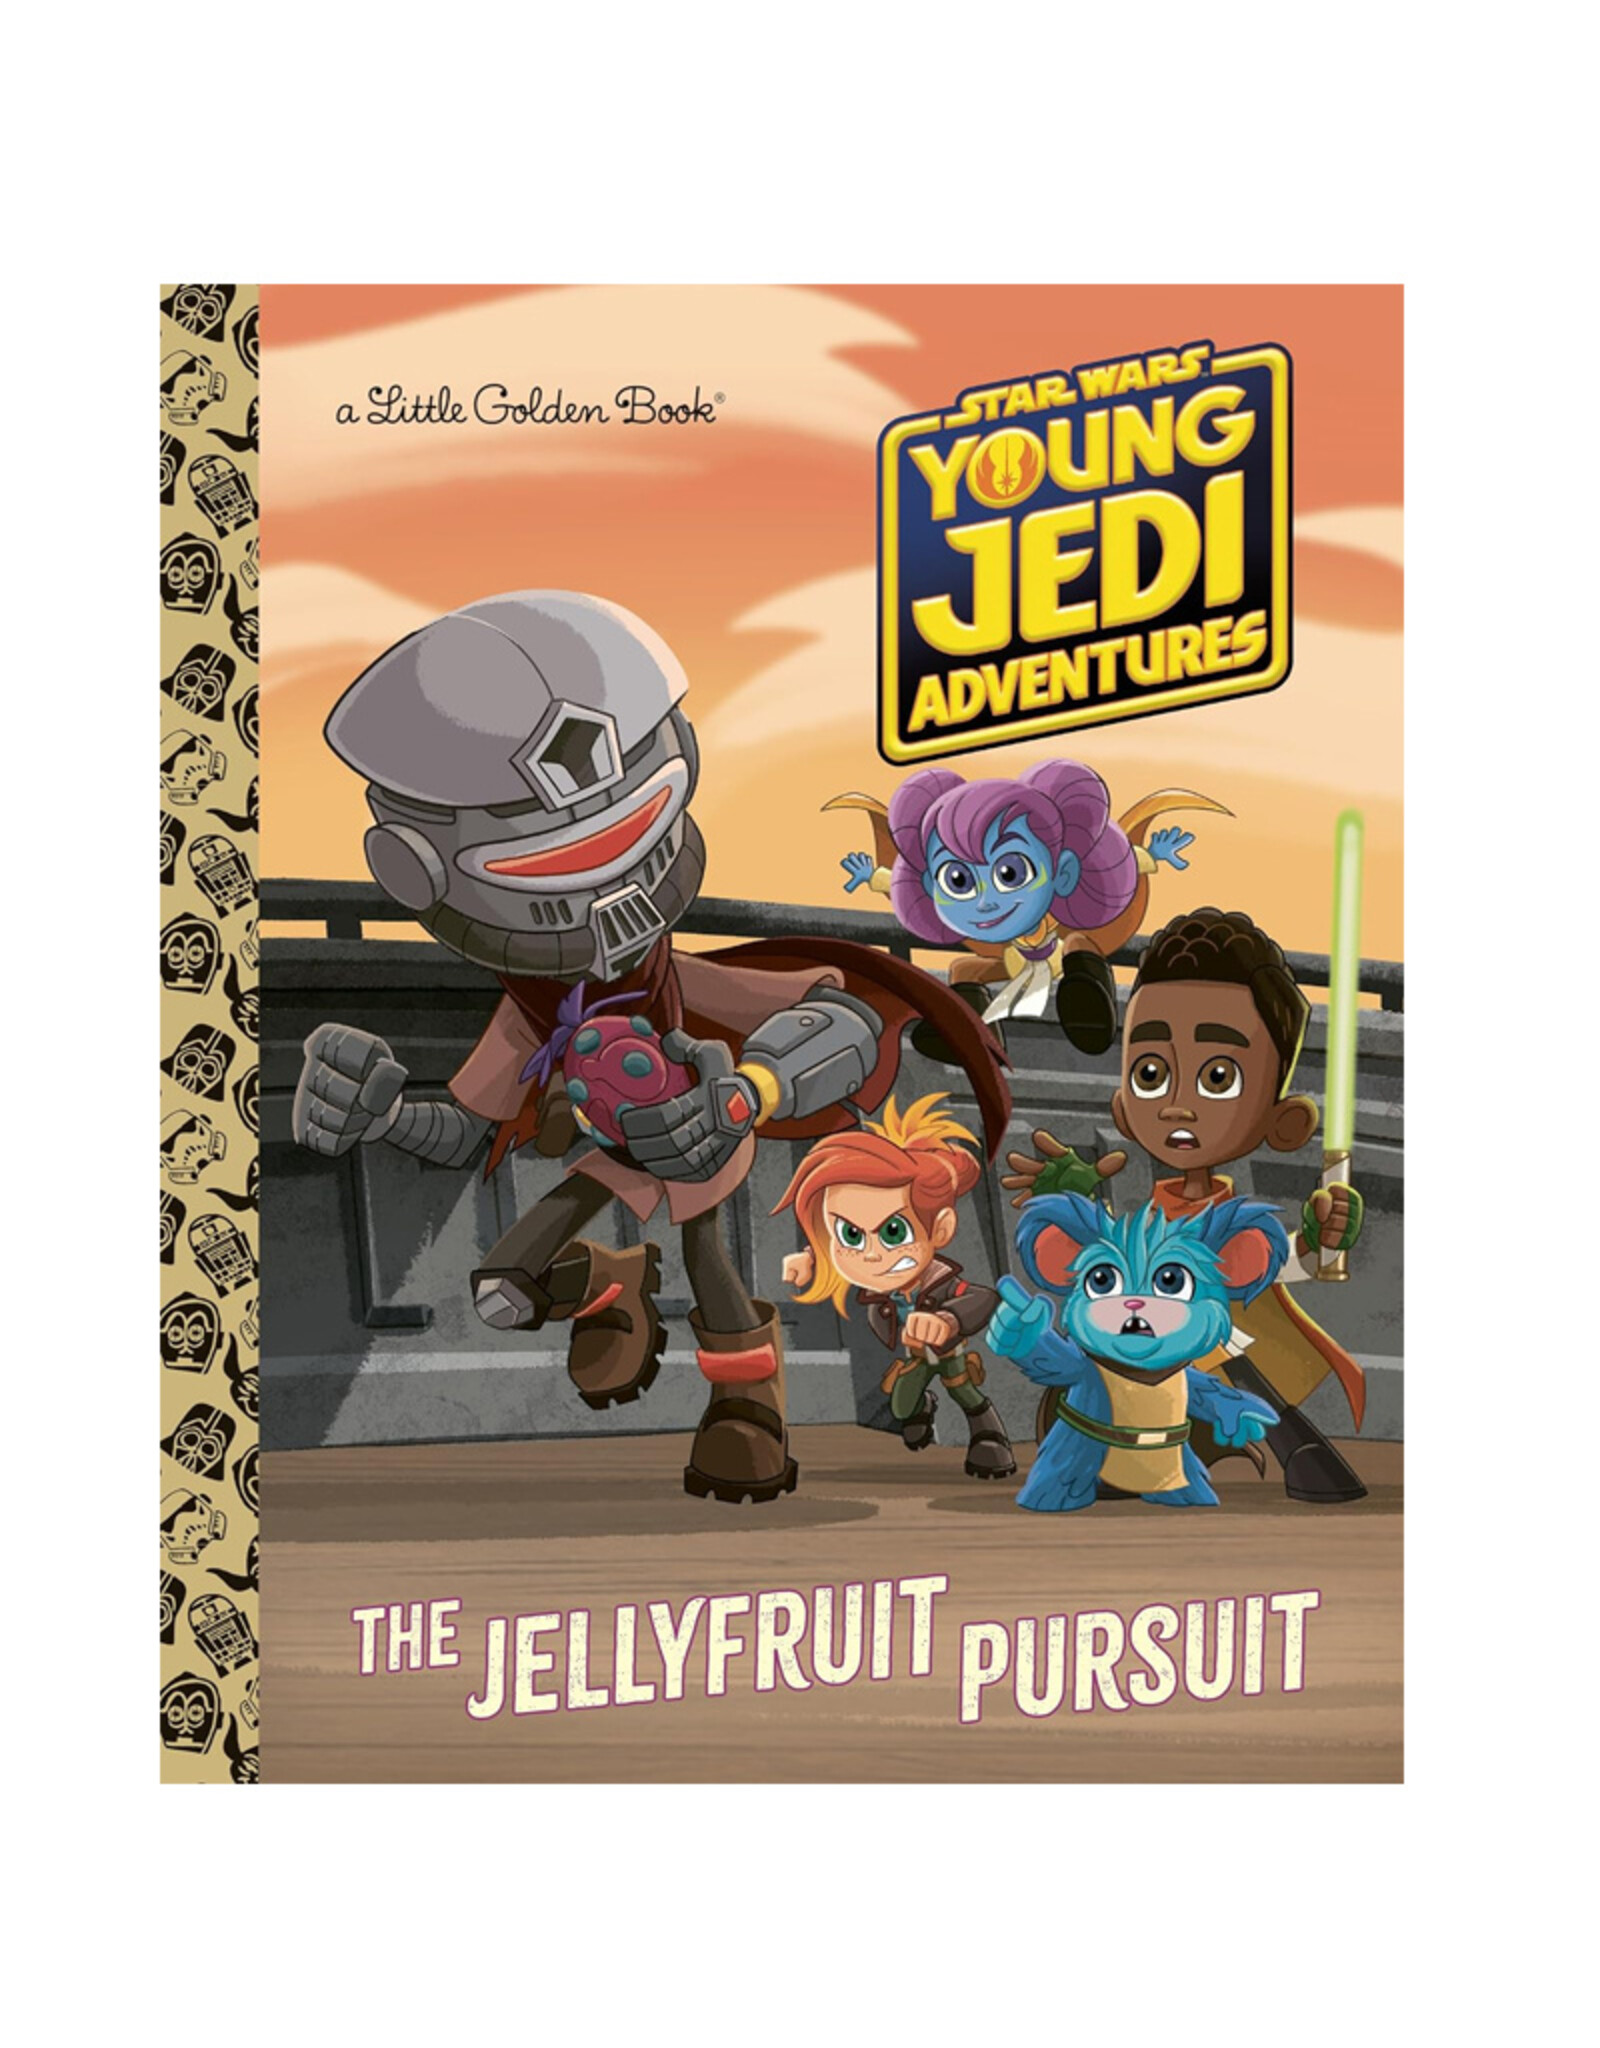 Little Golden Book Little Golden Book: Star Wars Young Jedi Adventures - The Jellyfruit Pursuit